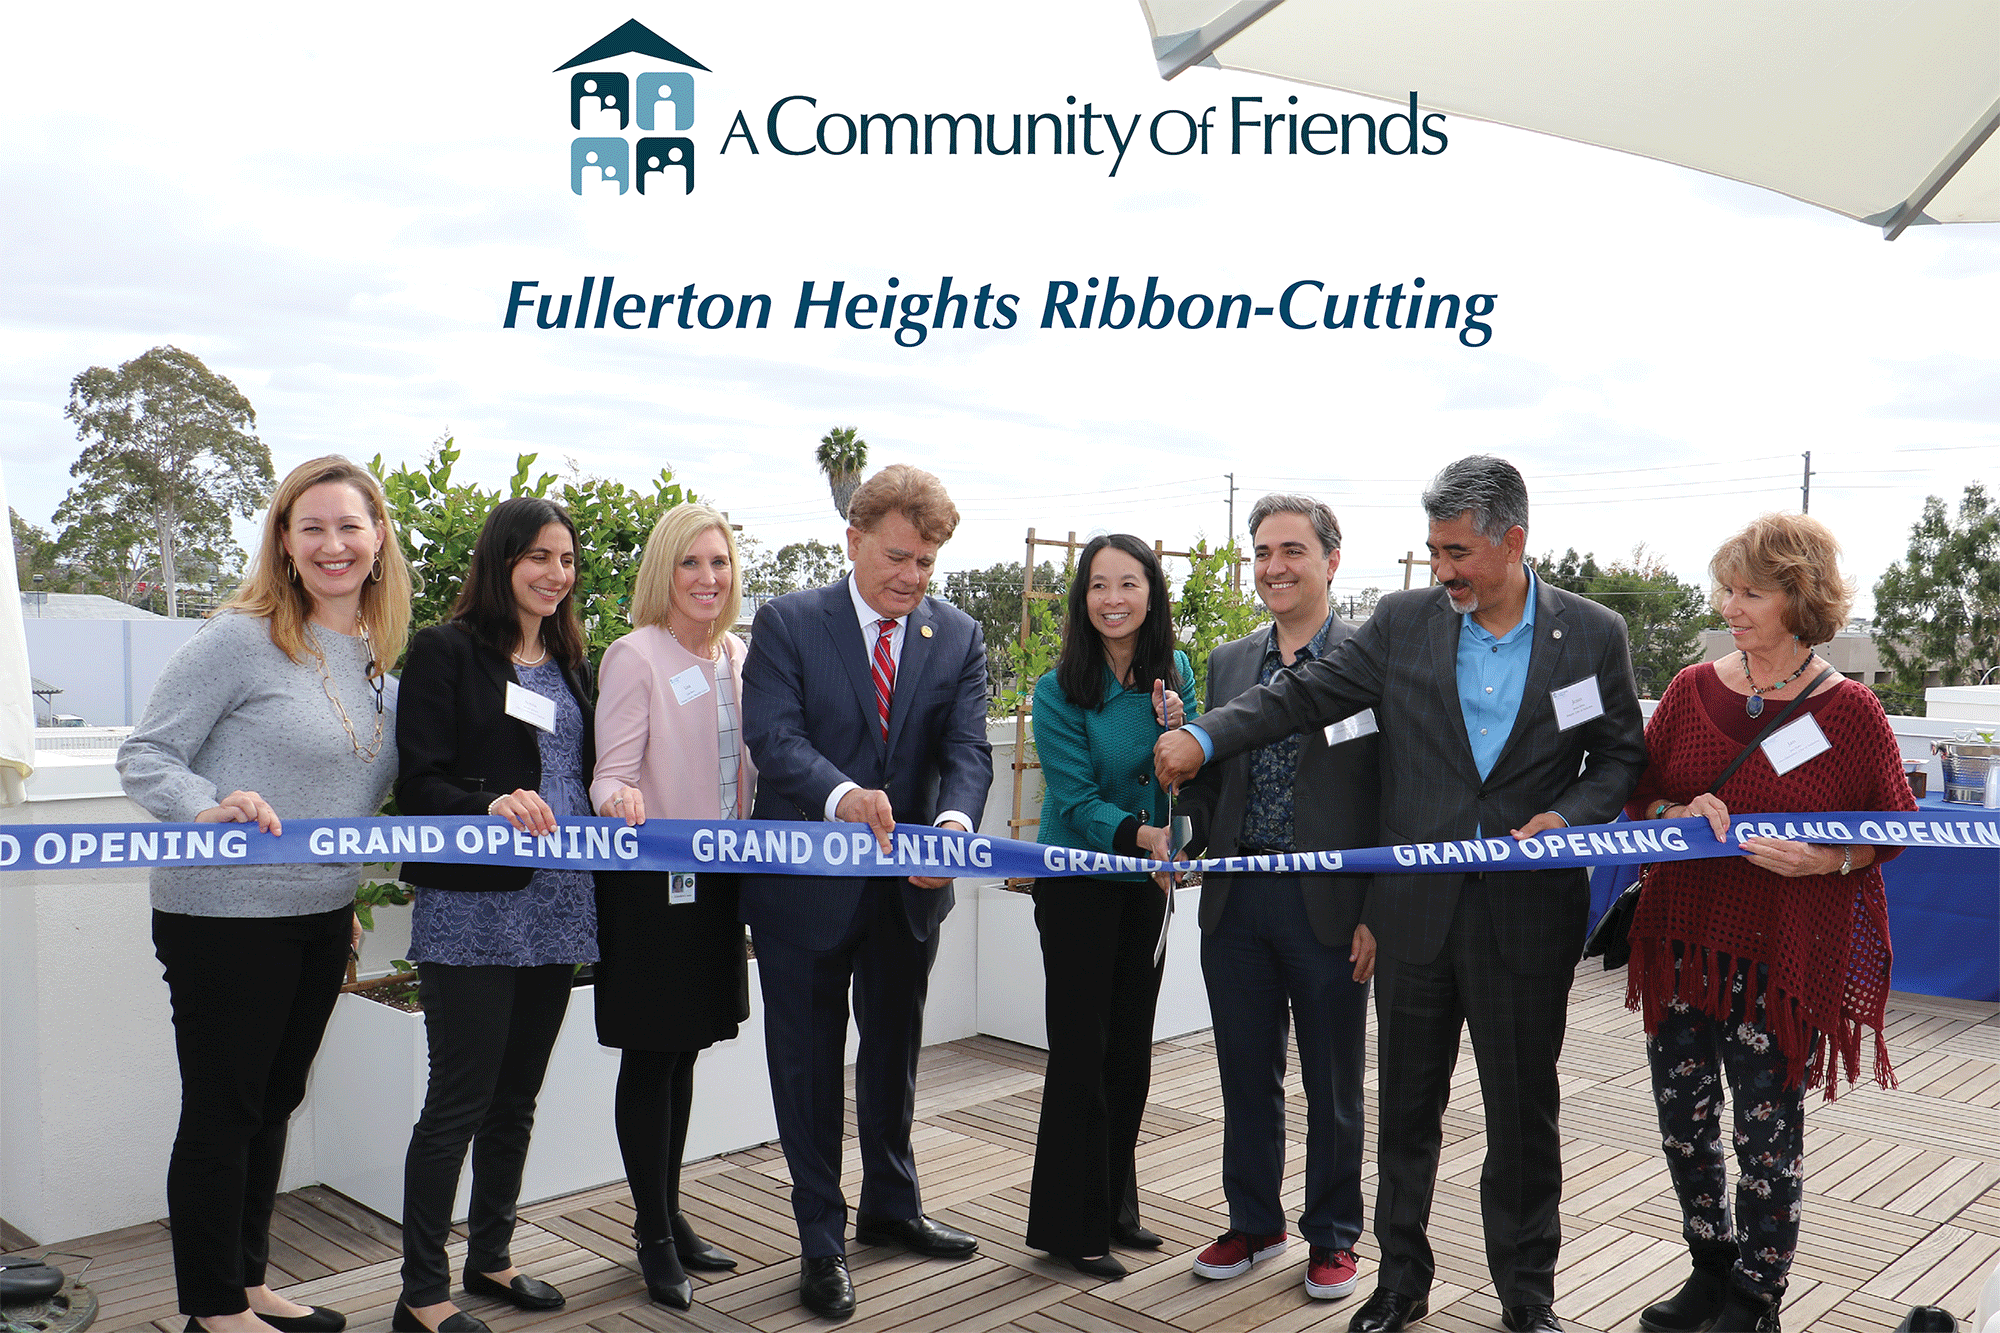 Fullerton Heights Ribbon-Cutting